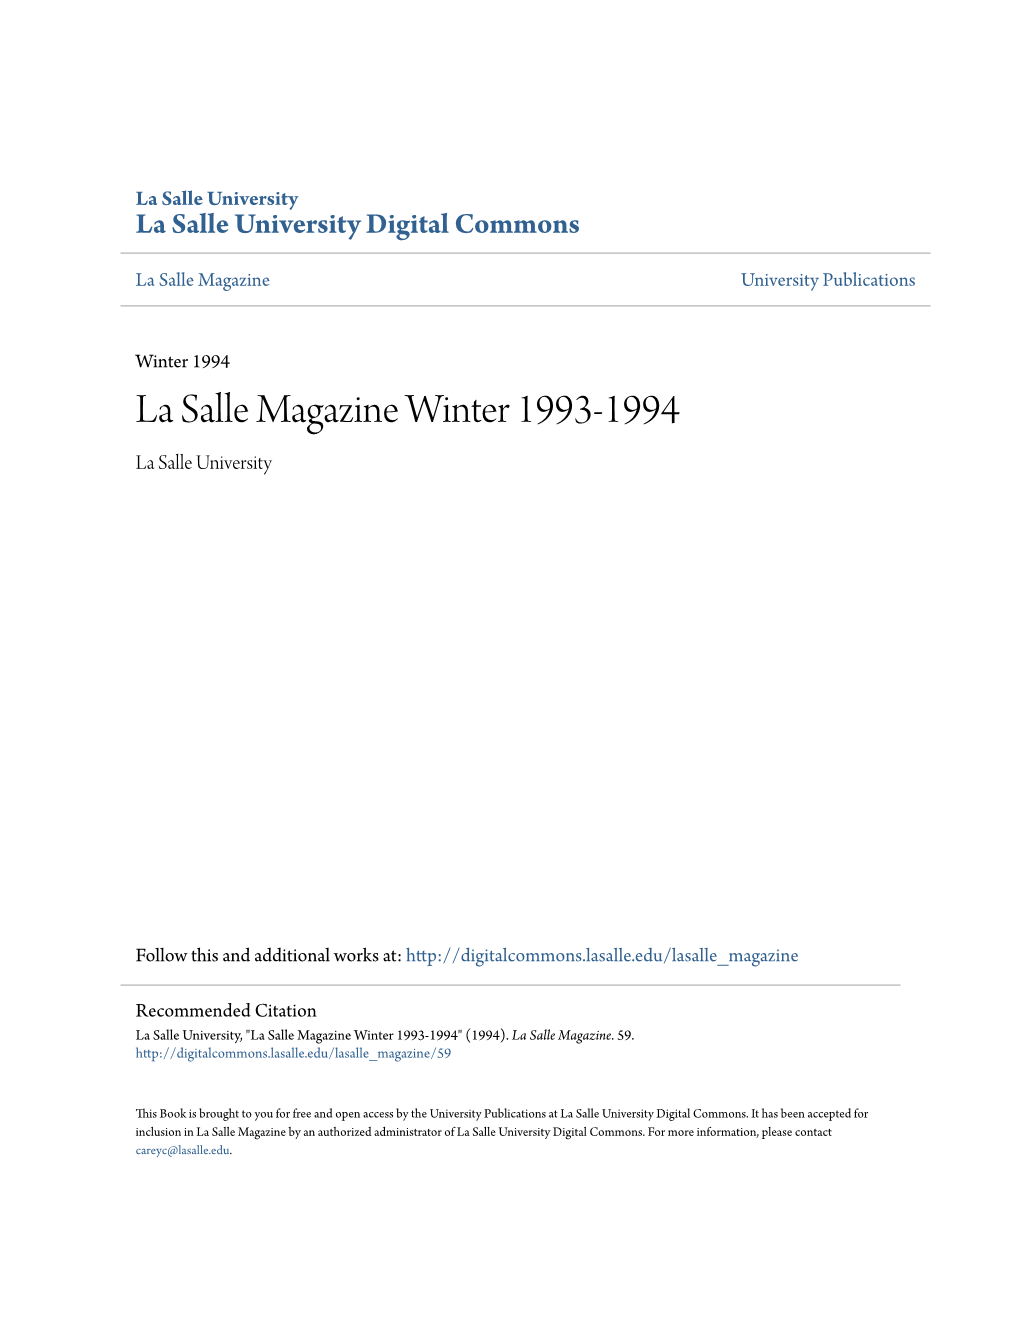 La Salle Magazine Winter 1993-1994 La Salle University